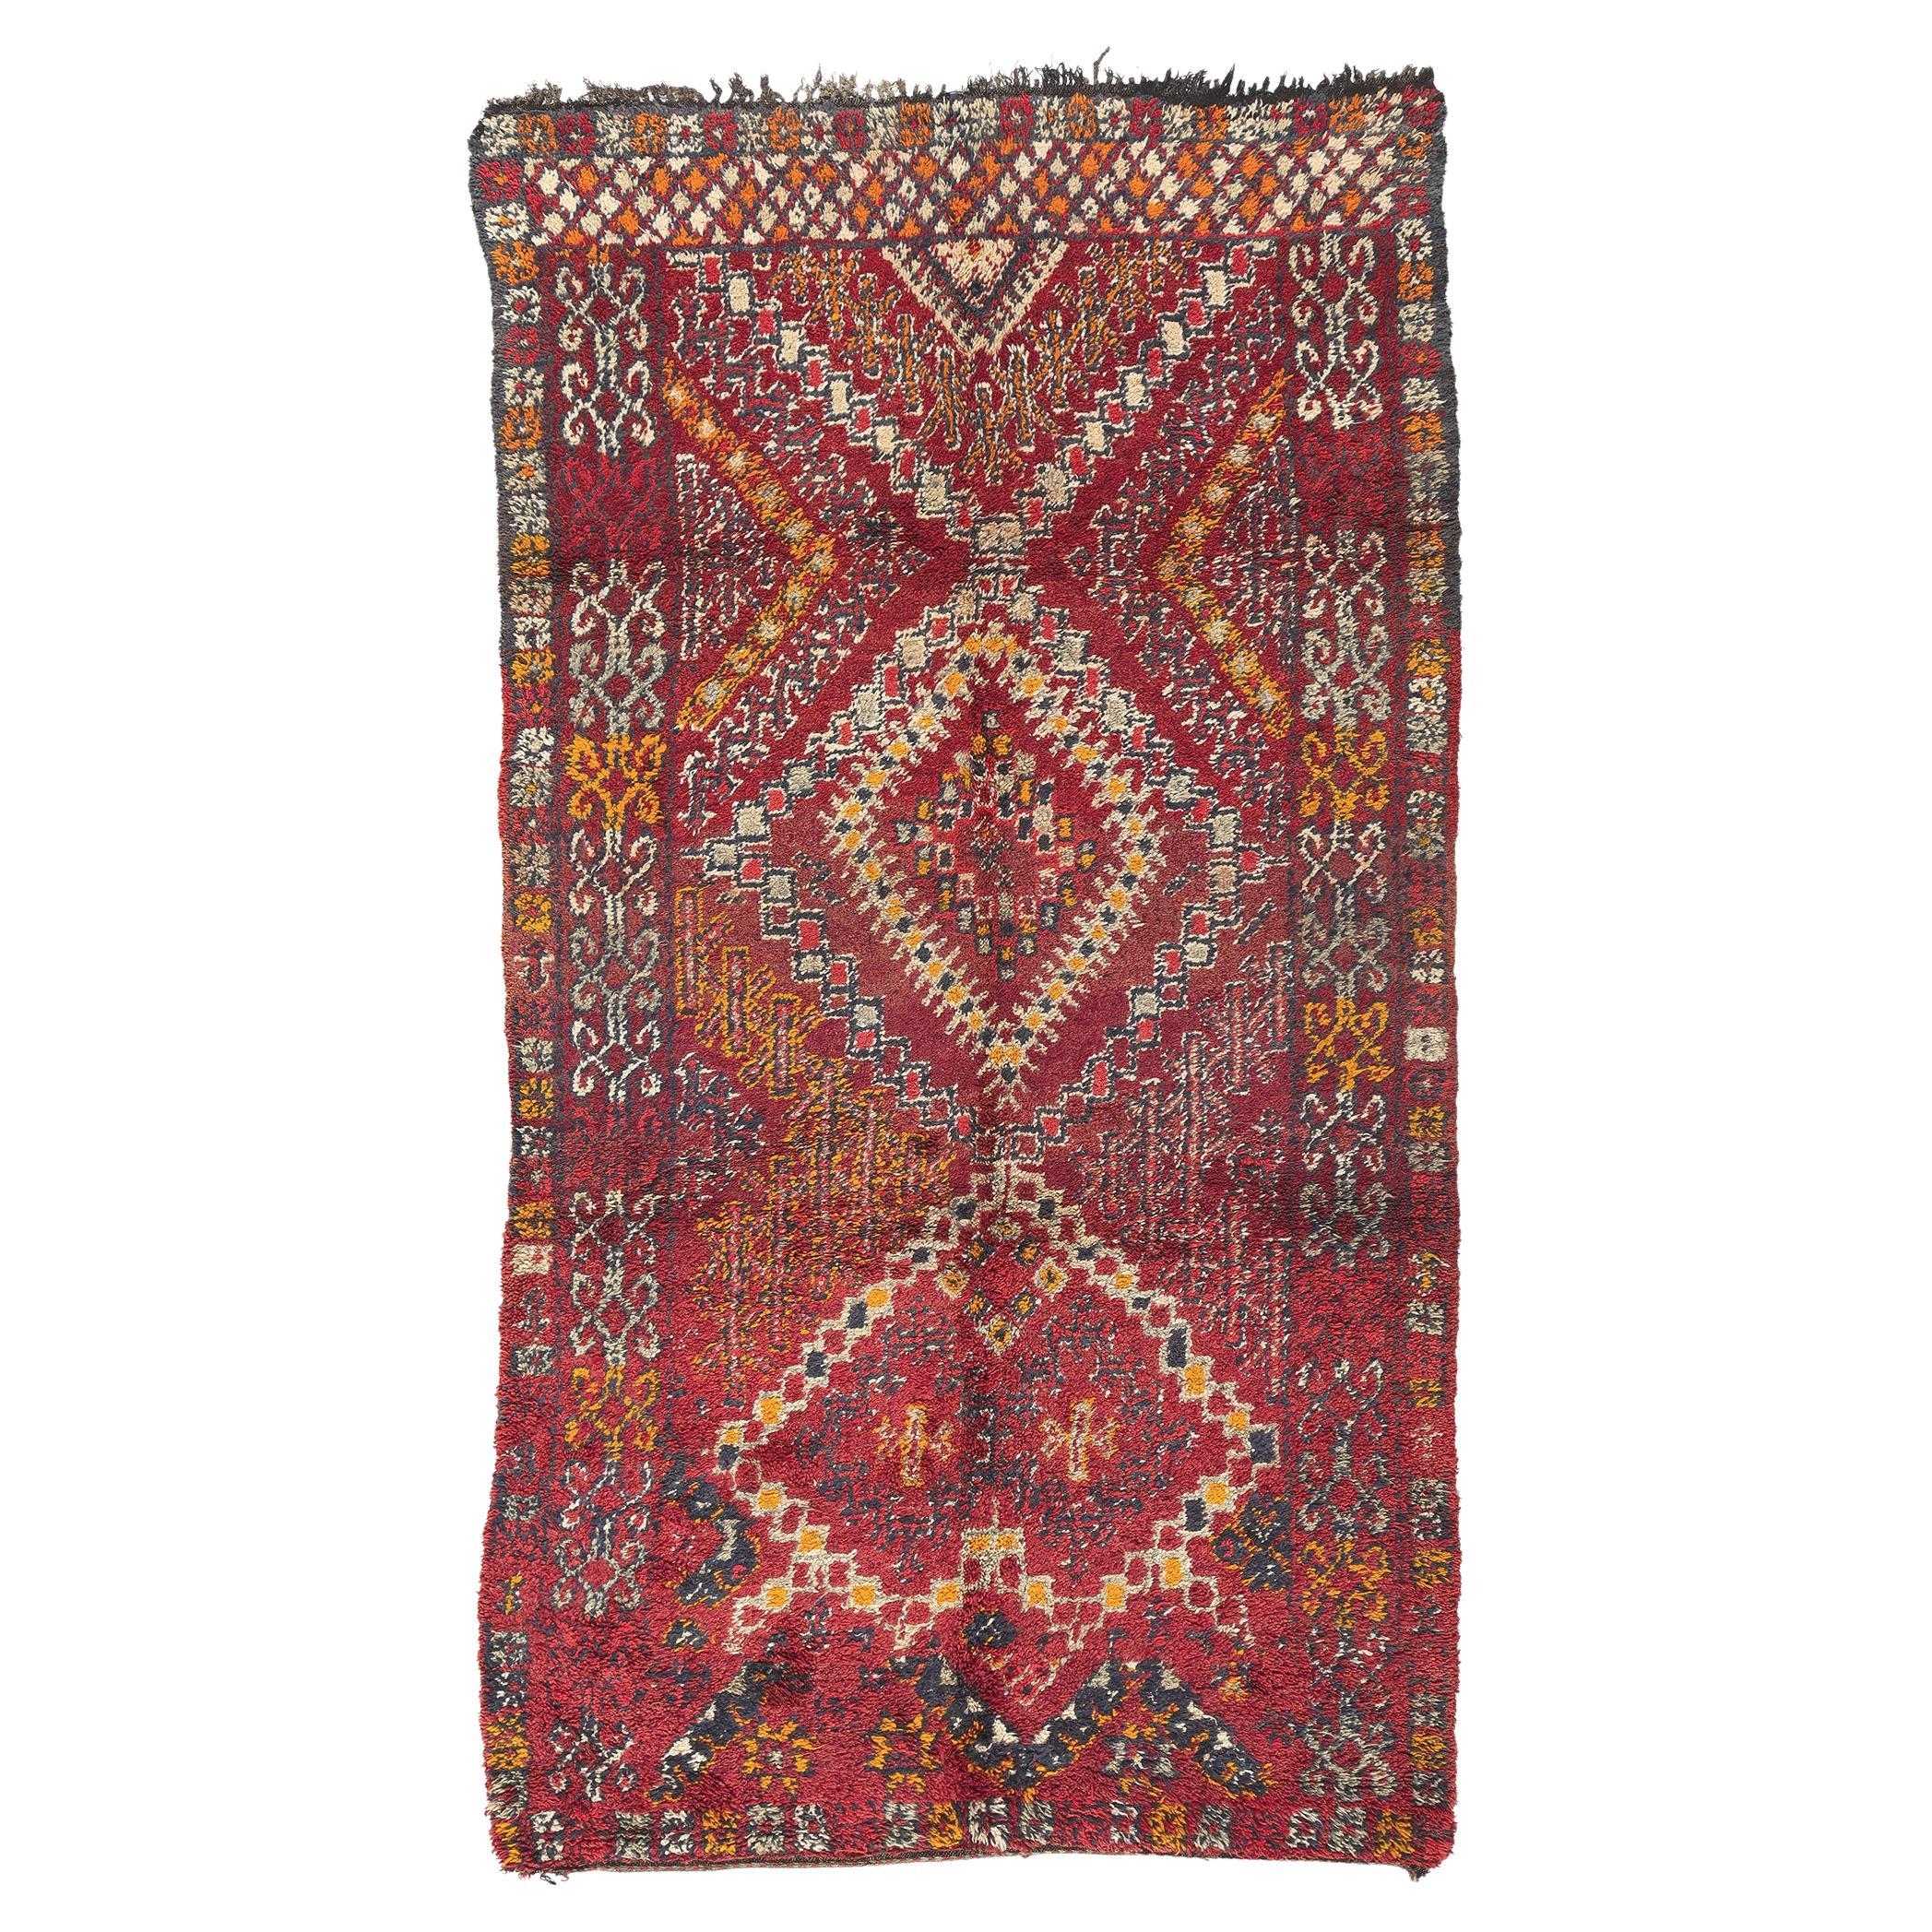 Vintage Beni MGuild Moroccan Rug, Tribal Enchantment Meets Midcentury Modern